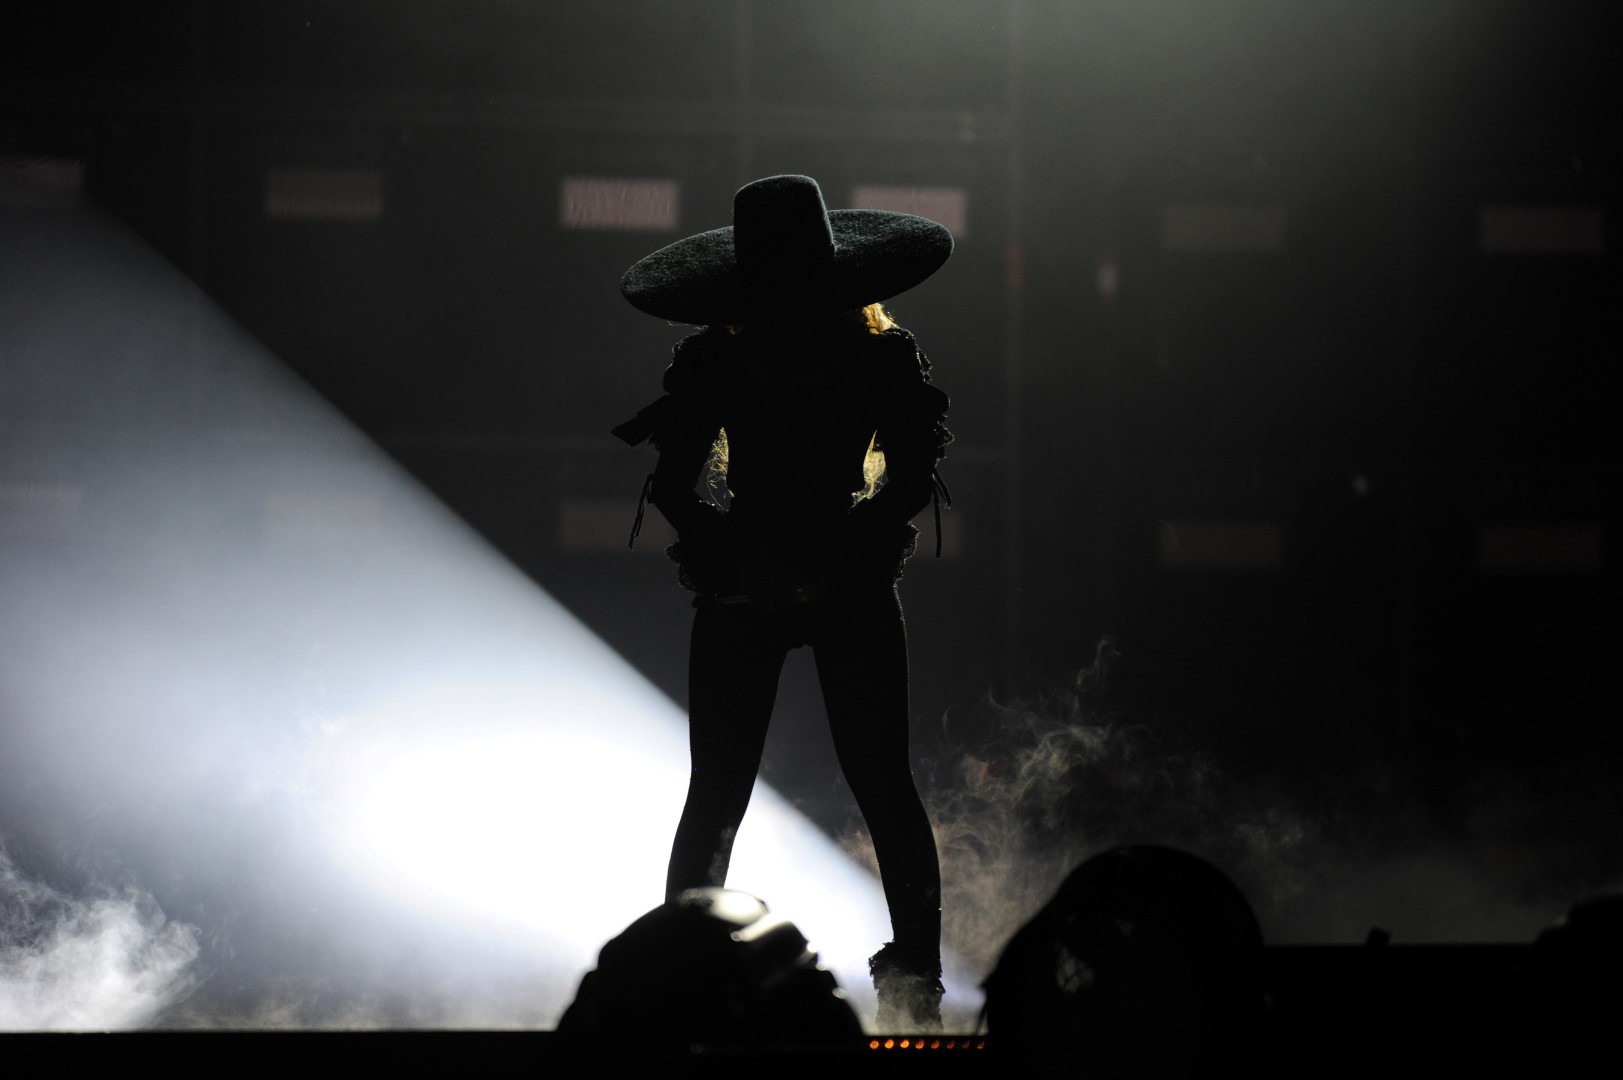 Beyoncé Formation World Tour 2016 Milano: la cantante apre lo show con un look speciale di Dsquared2